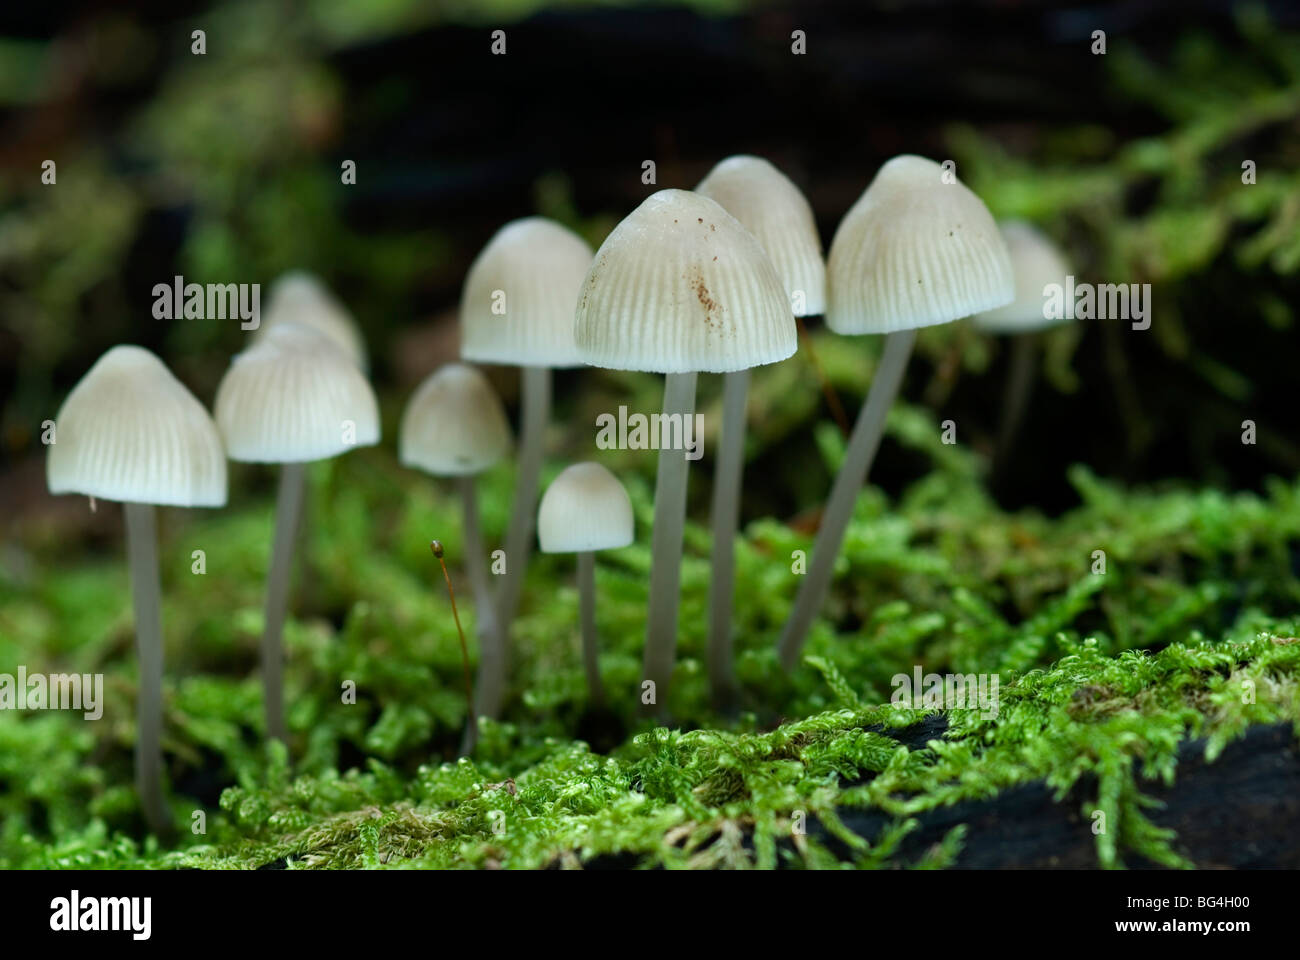 Fungi found in England during the autumn Stock Photo